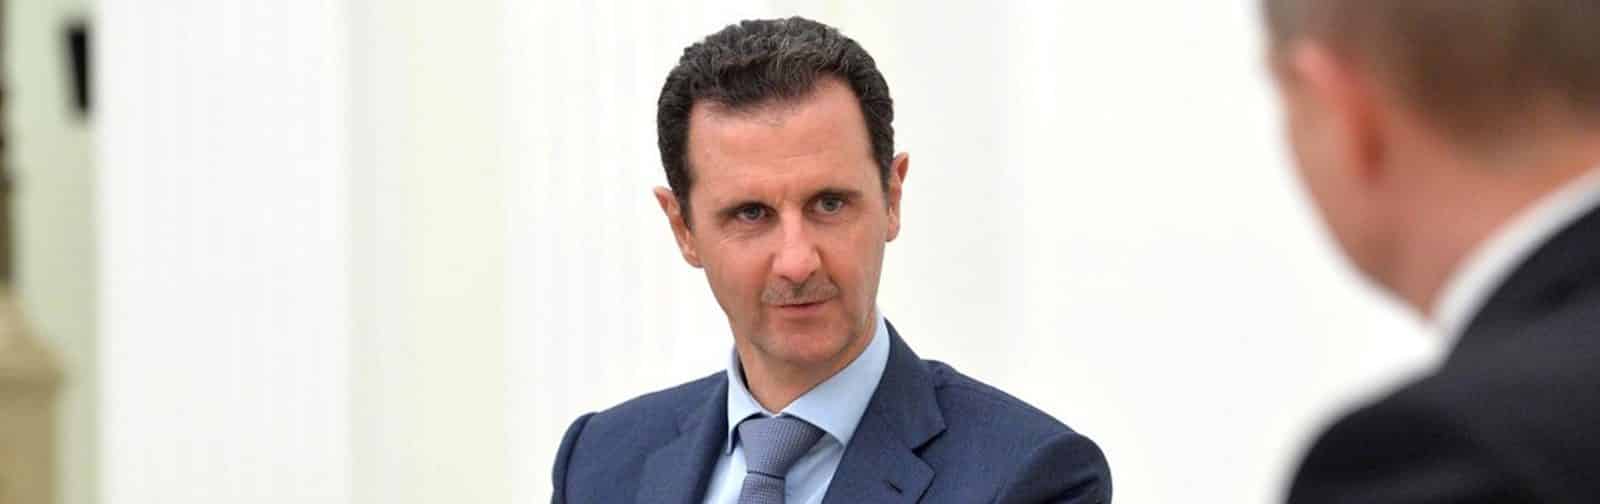 Bashar al Assad in Russia 2015 10 21 02